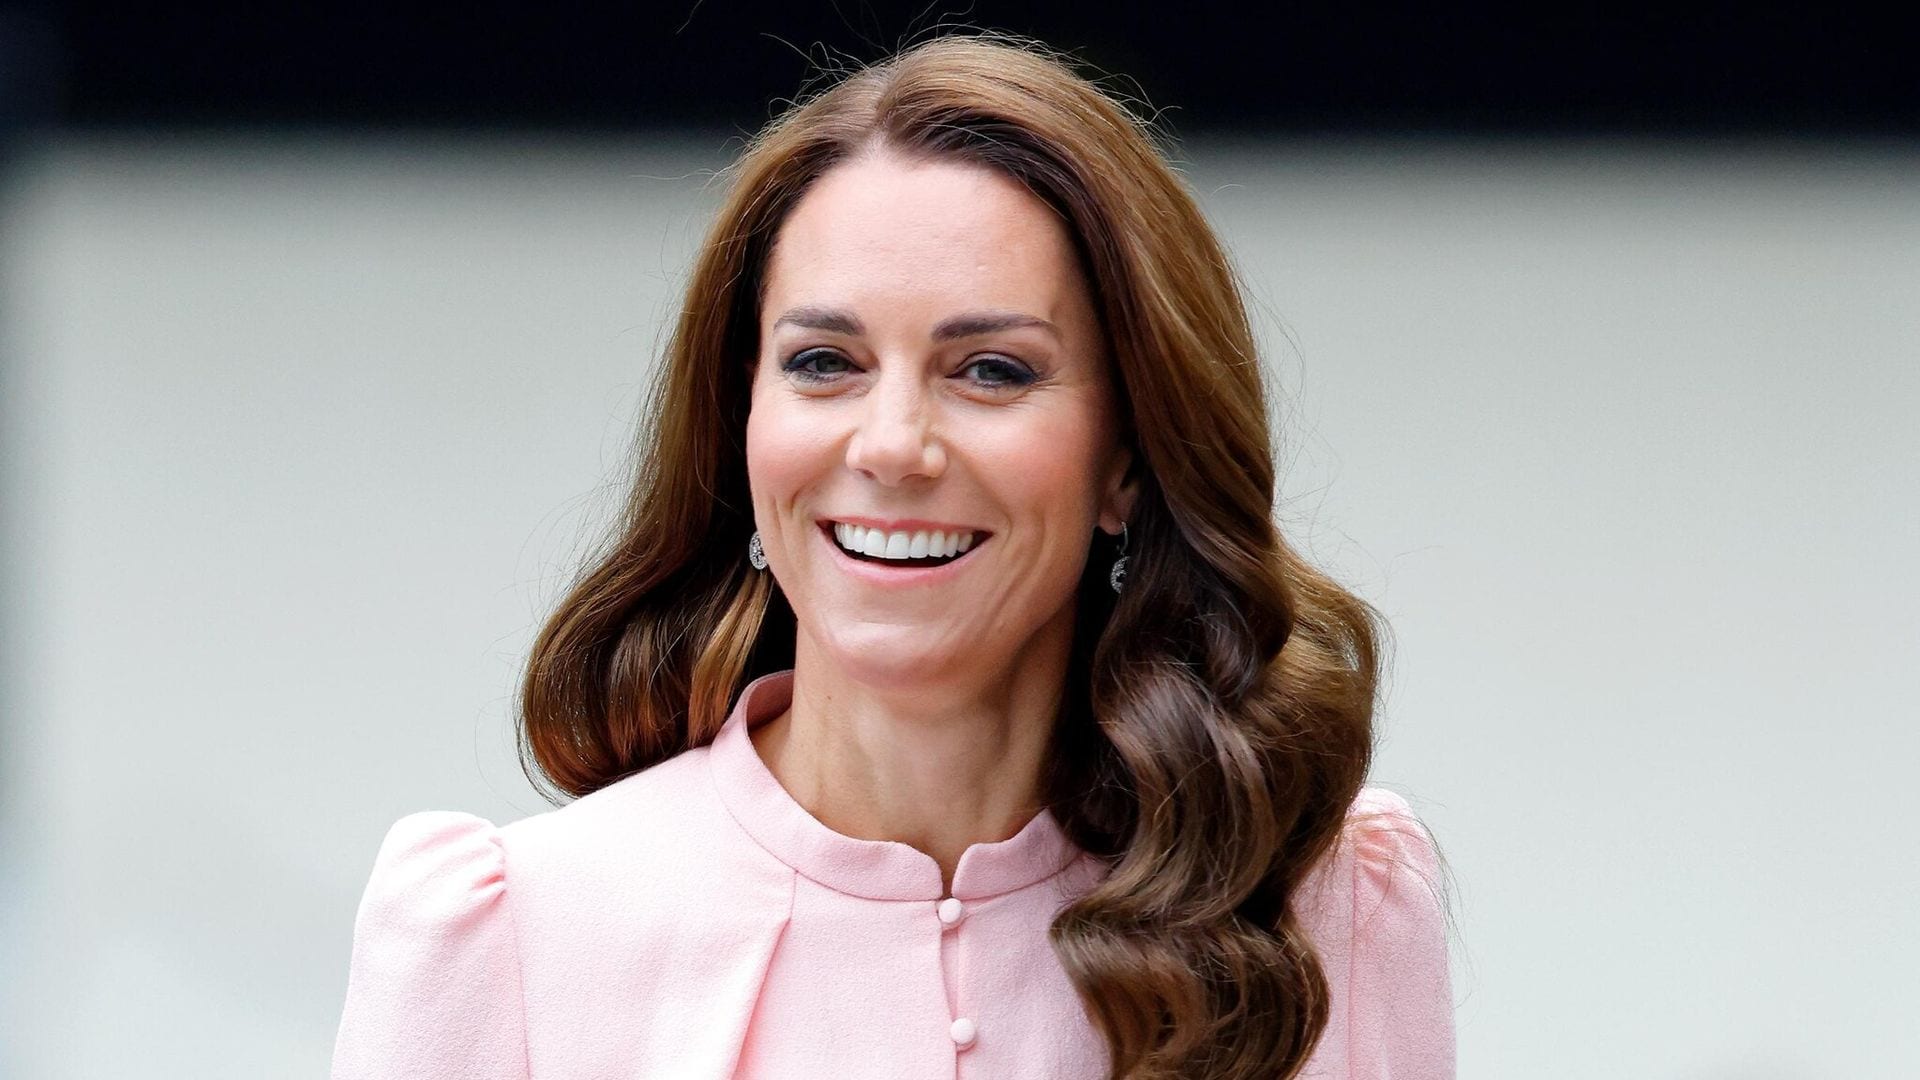 La princesa Kate Middleton reaparece en público por primera vez en dos meses